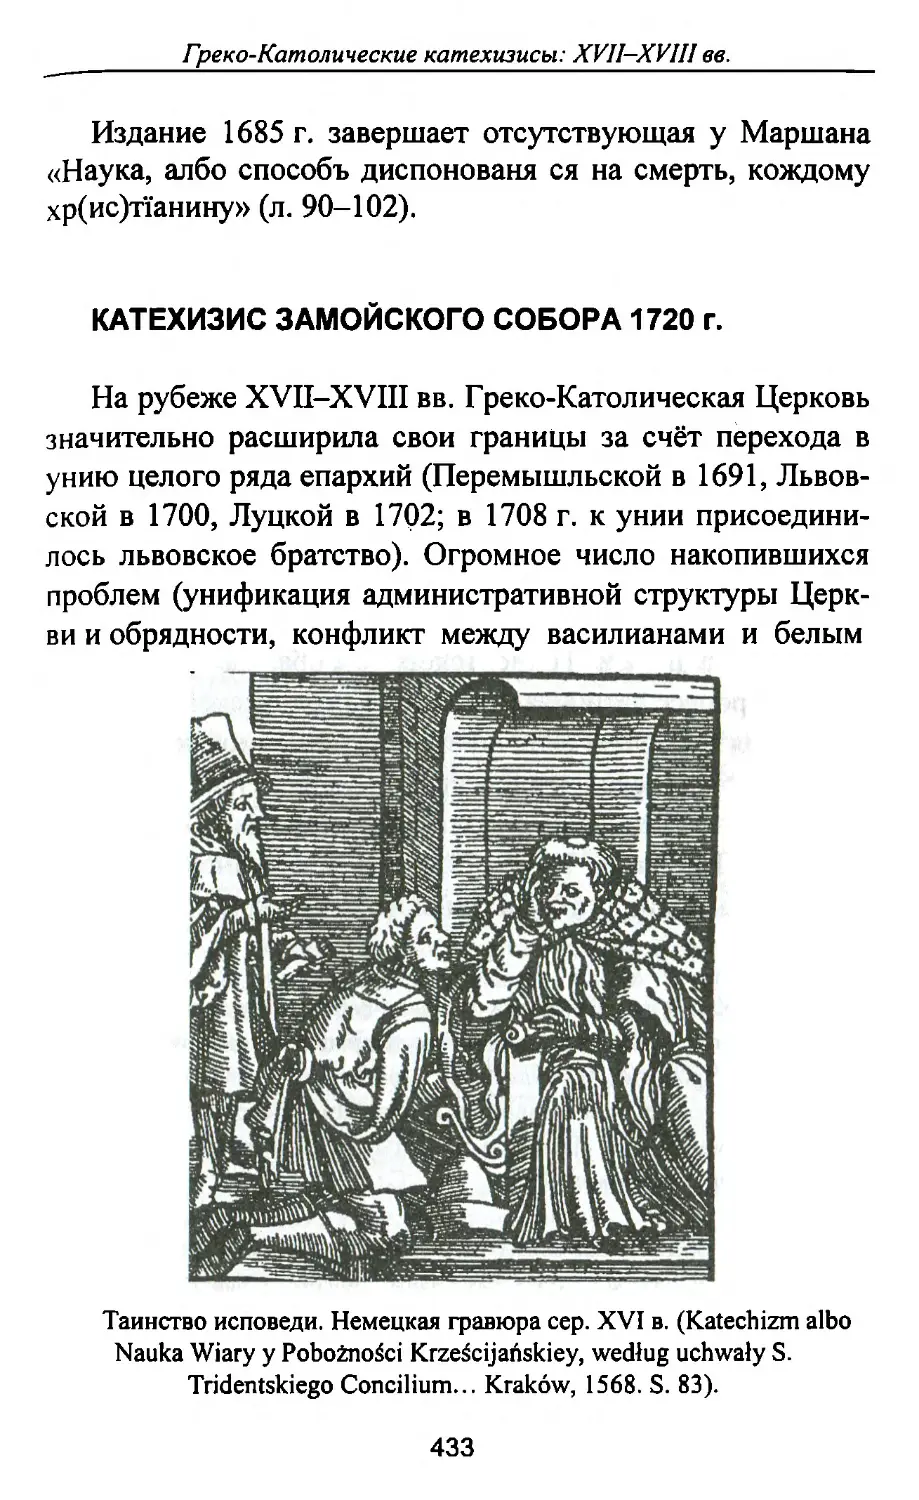 Катехизис Замойского собора 1720 г.